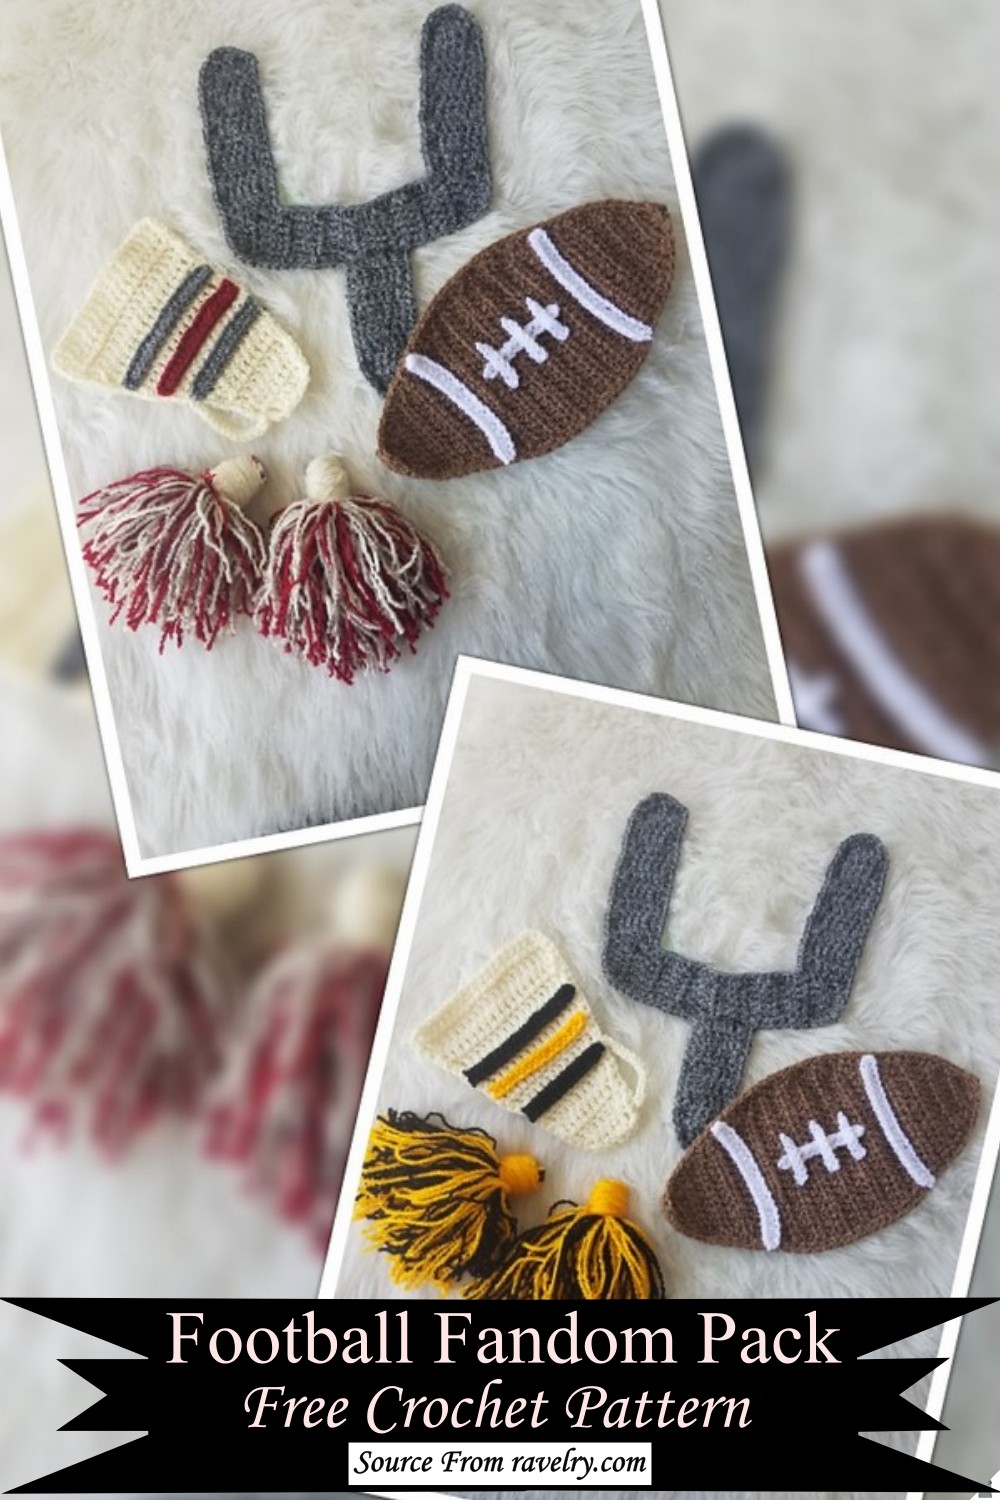 Crochet Football Fandom Pack Pattern